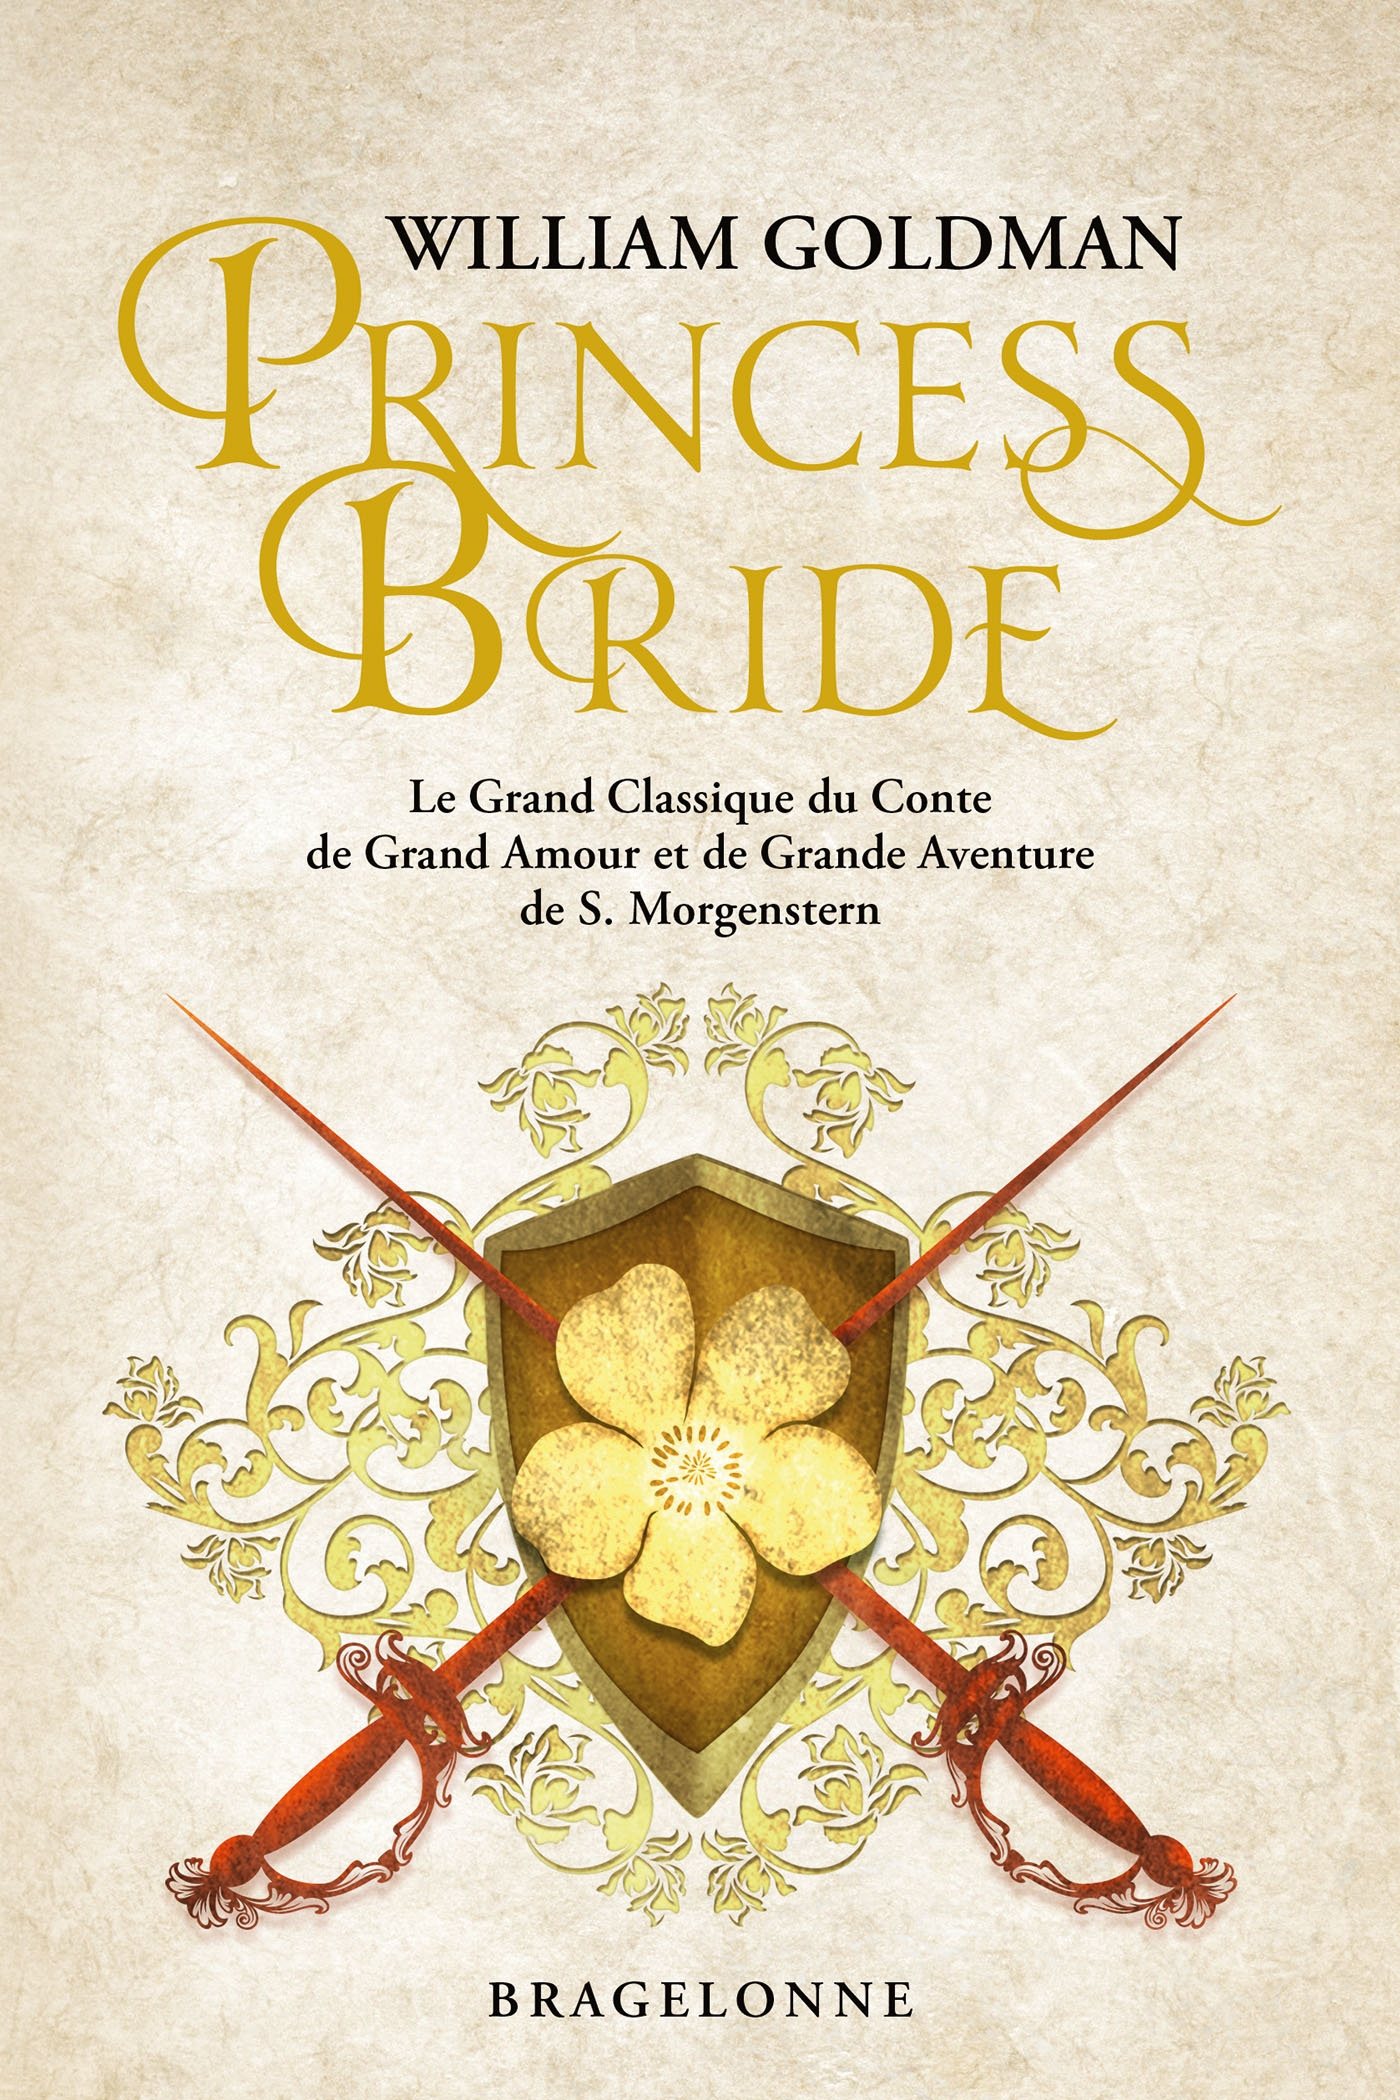 Afficher "Princess Bride"